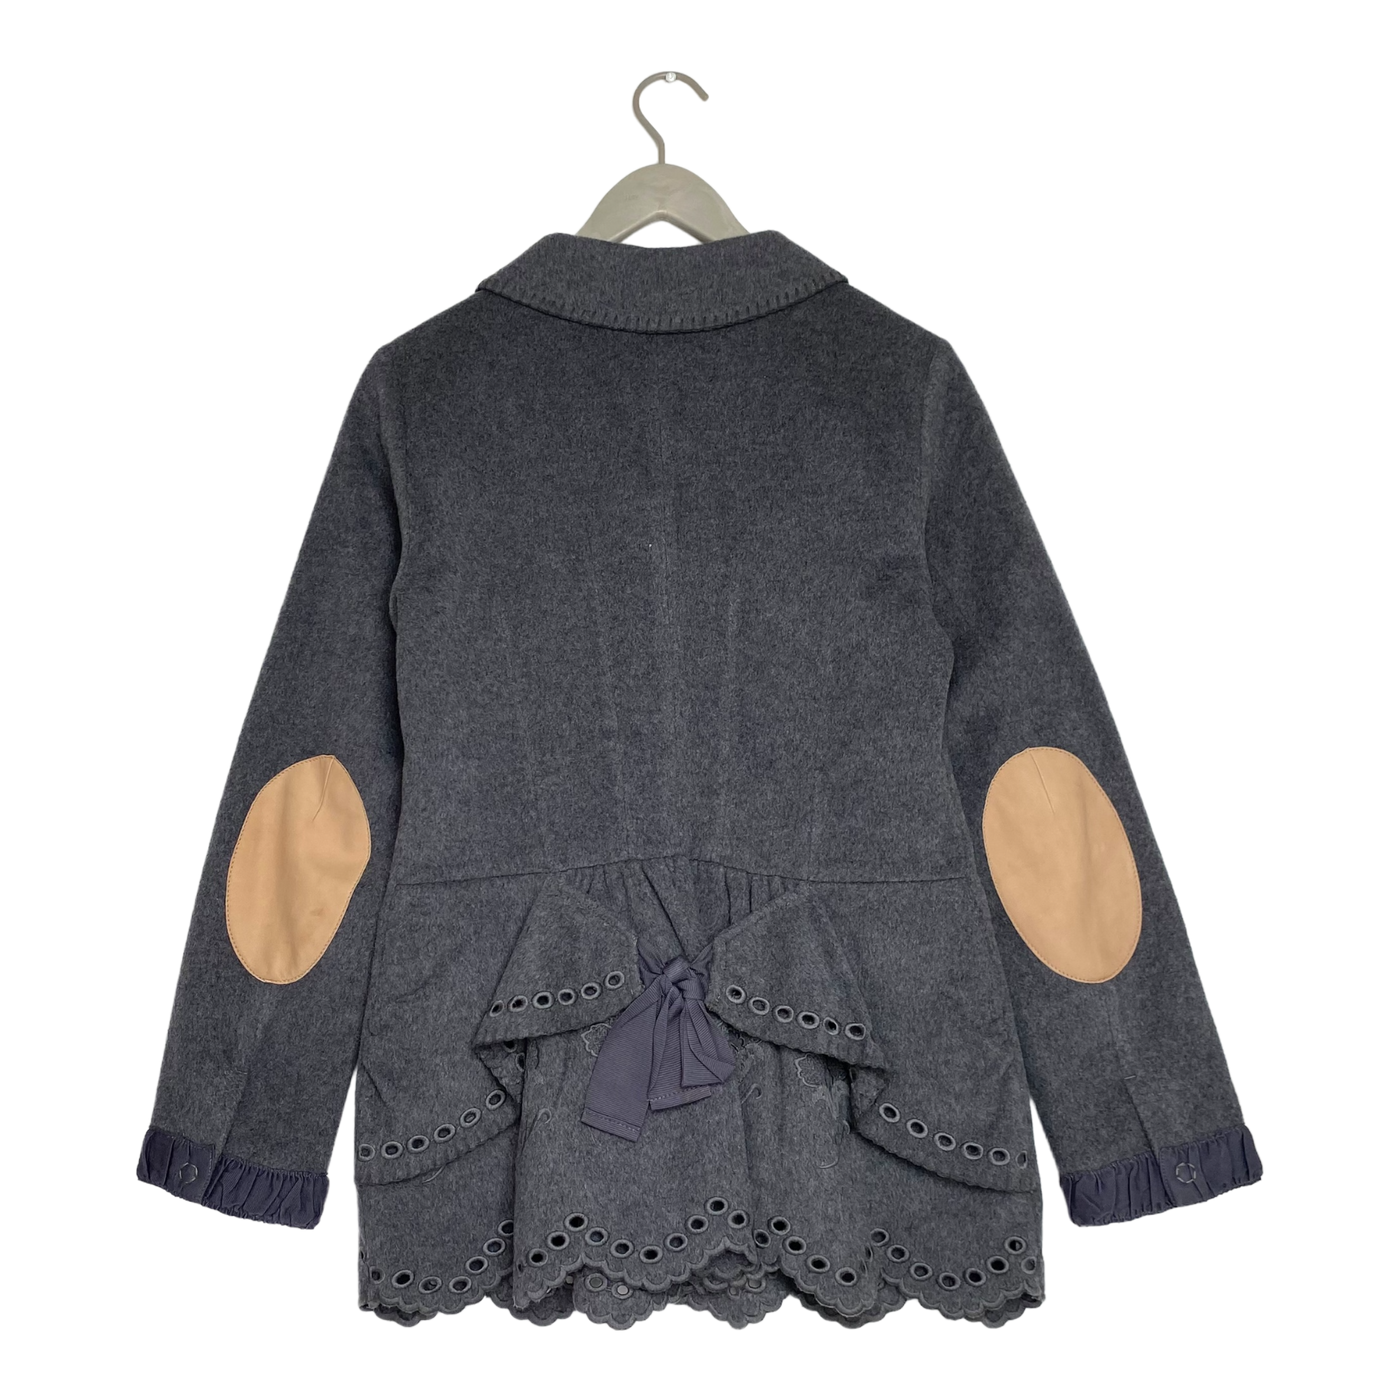 Odd Molly wool jacket, taupe grey | woman M